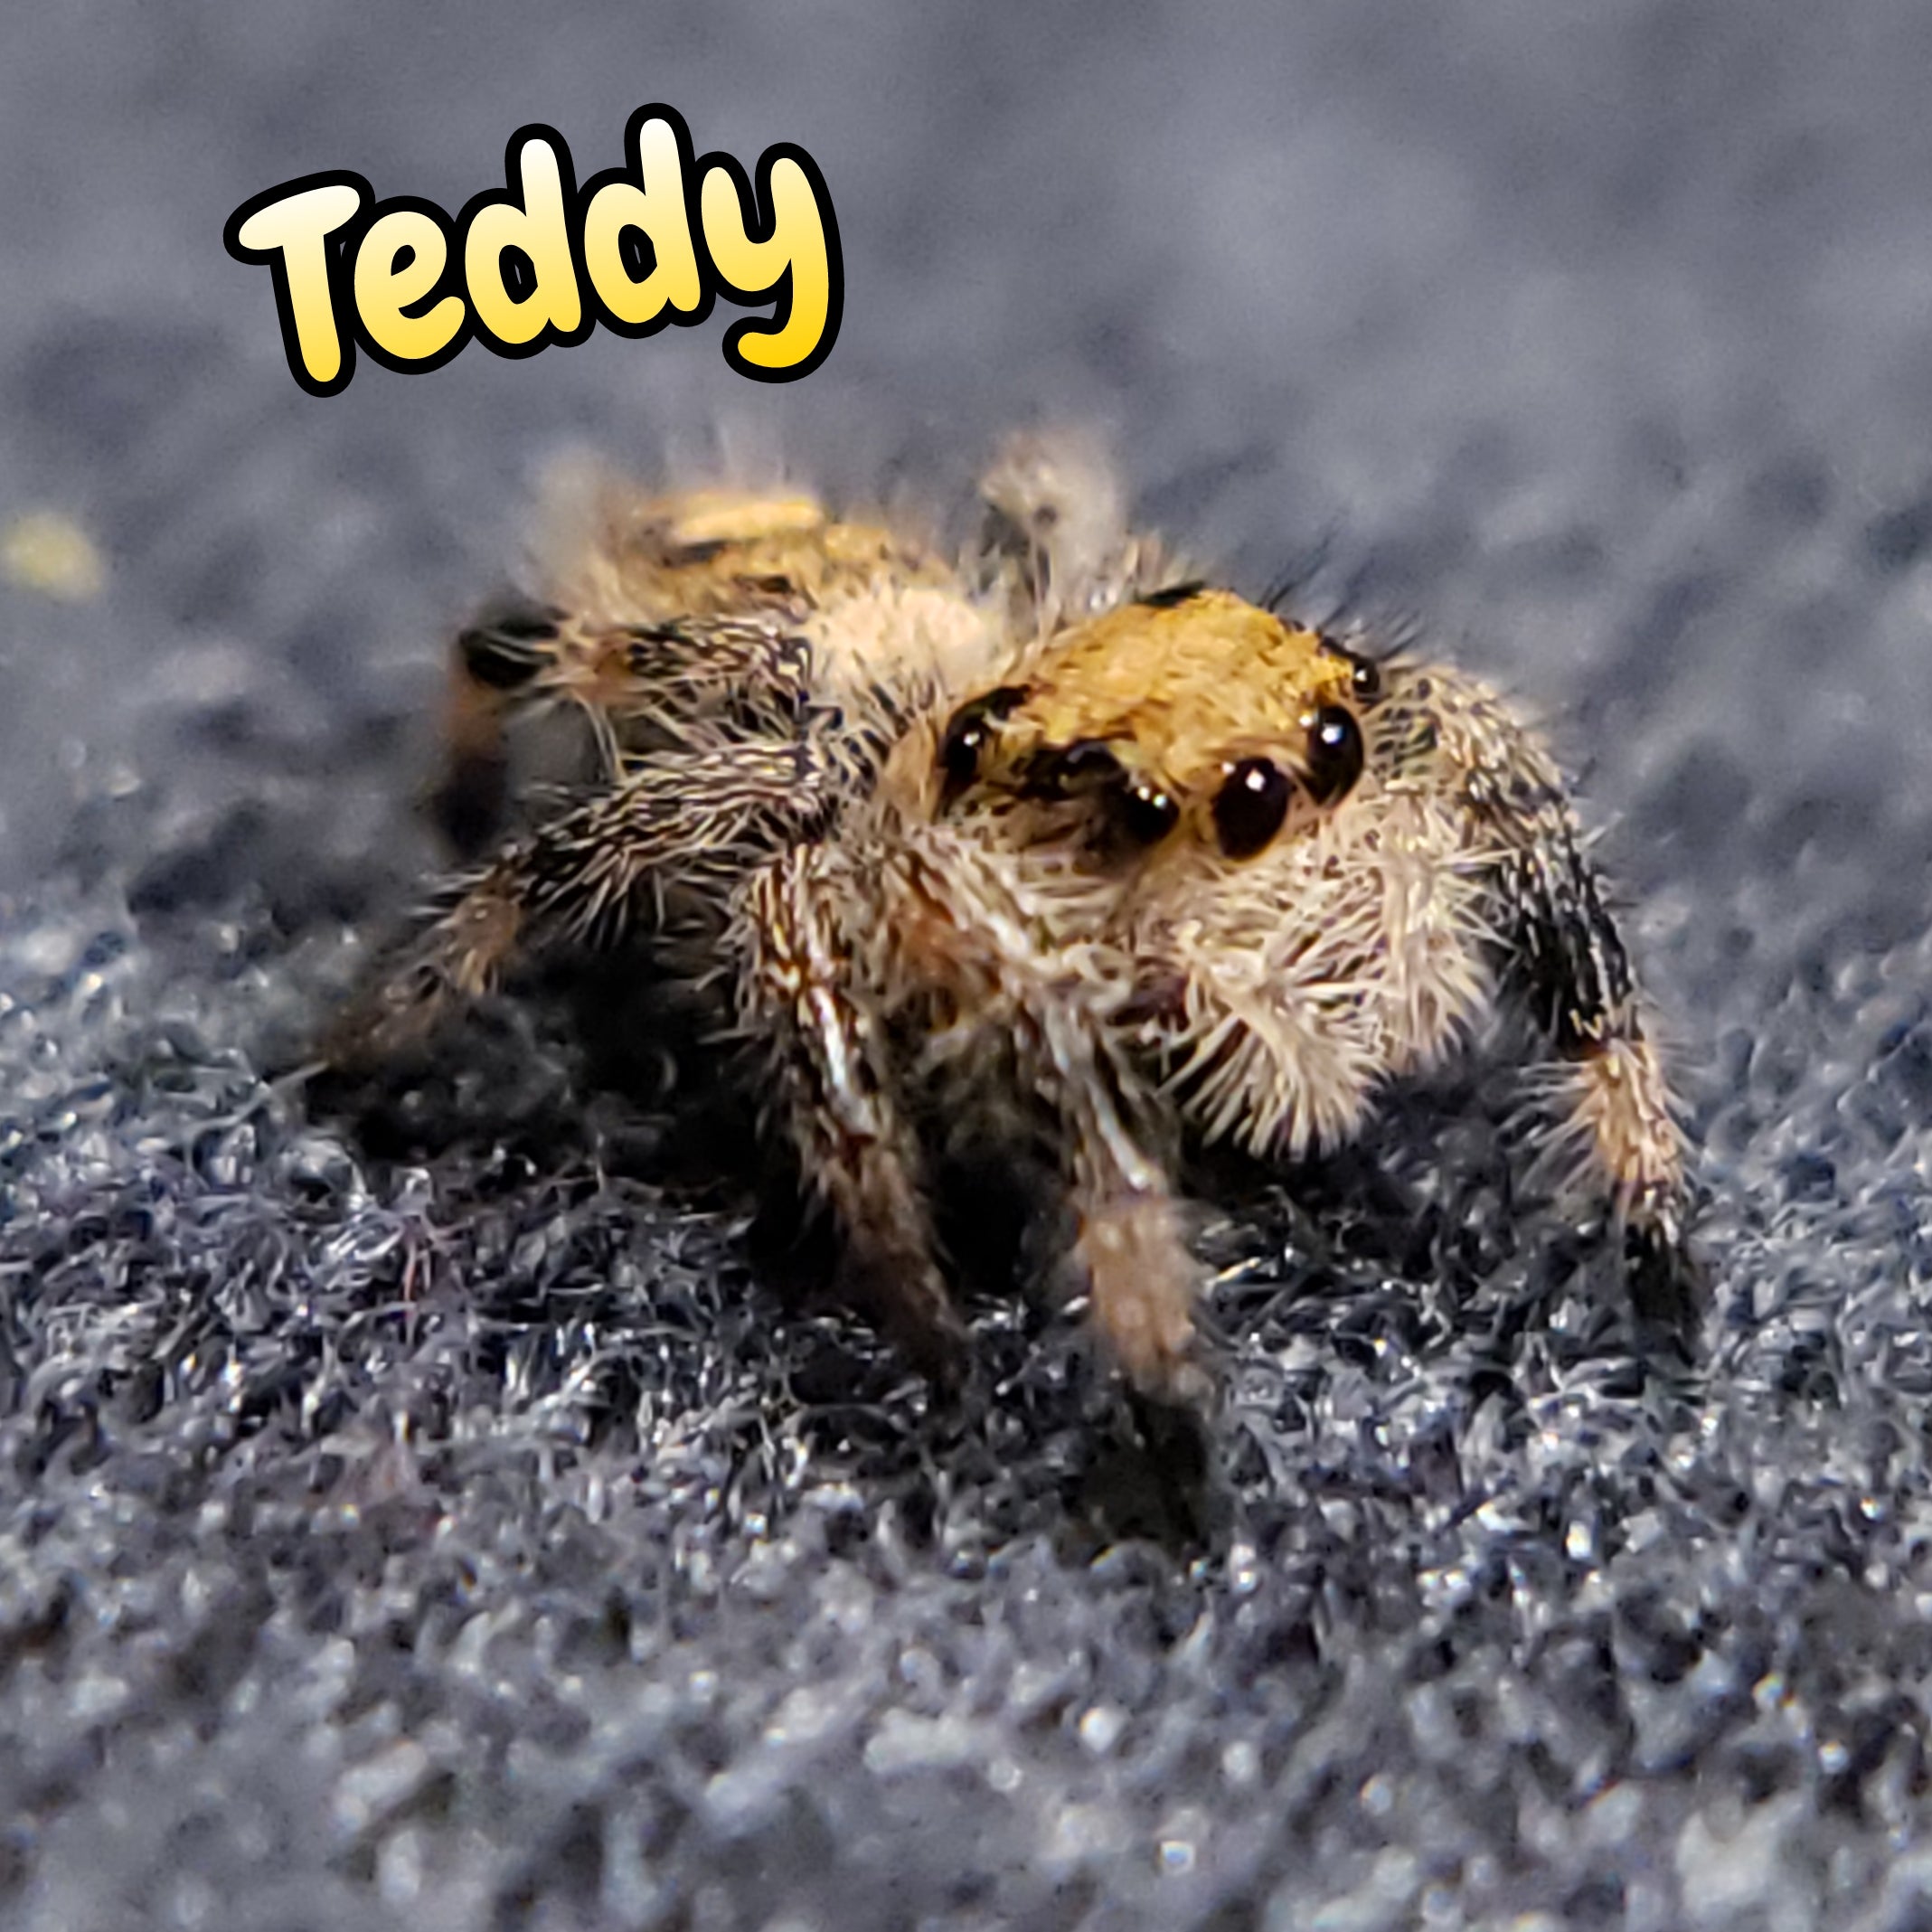 Regal Jumping Spider "Teddy"